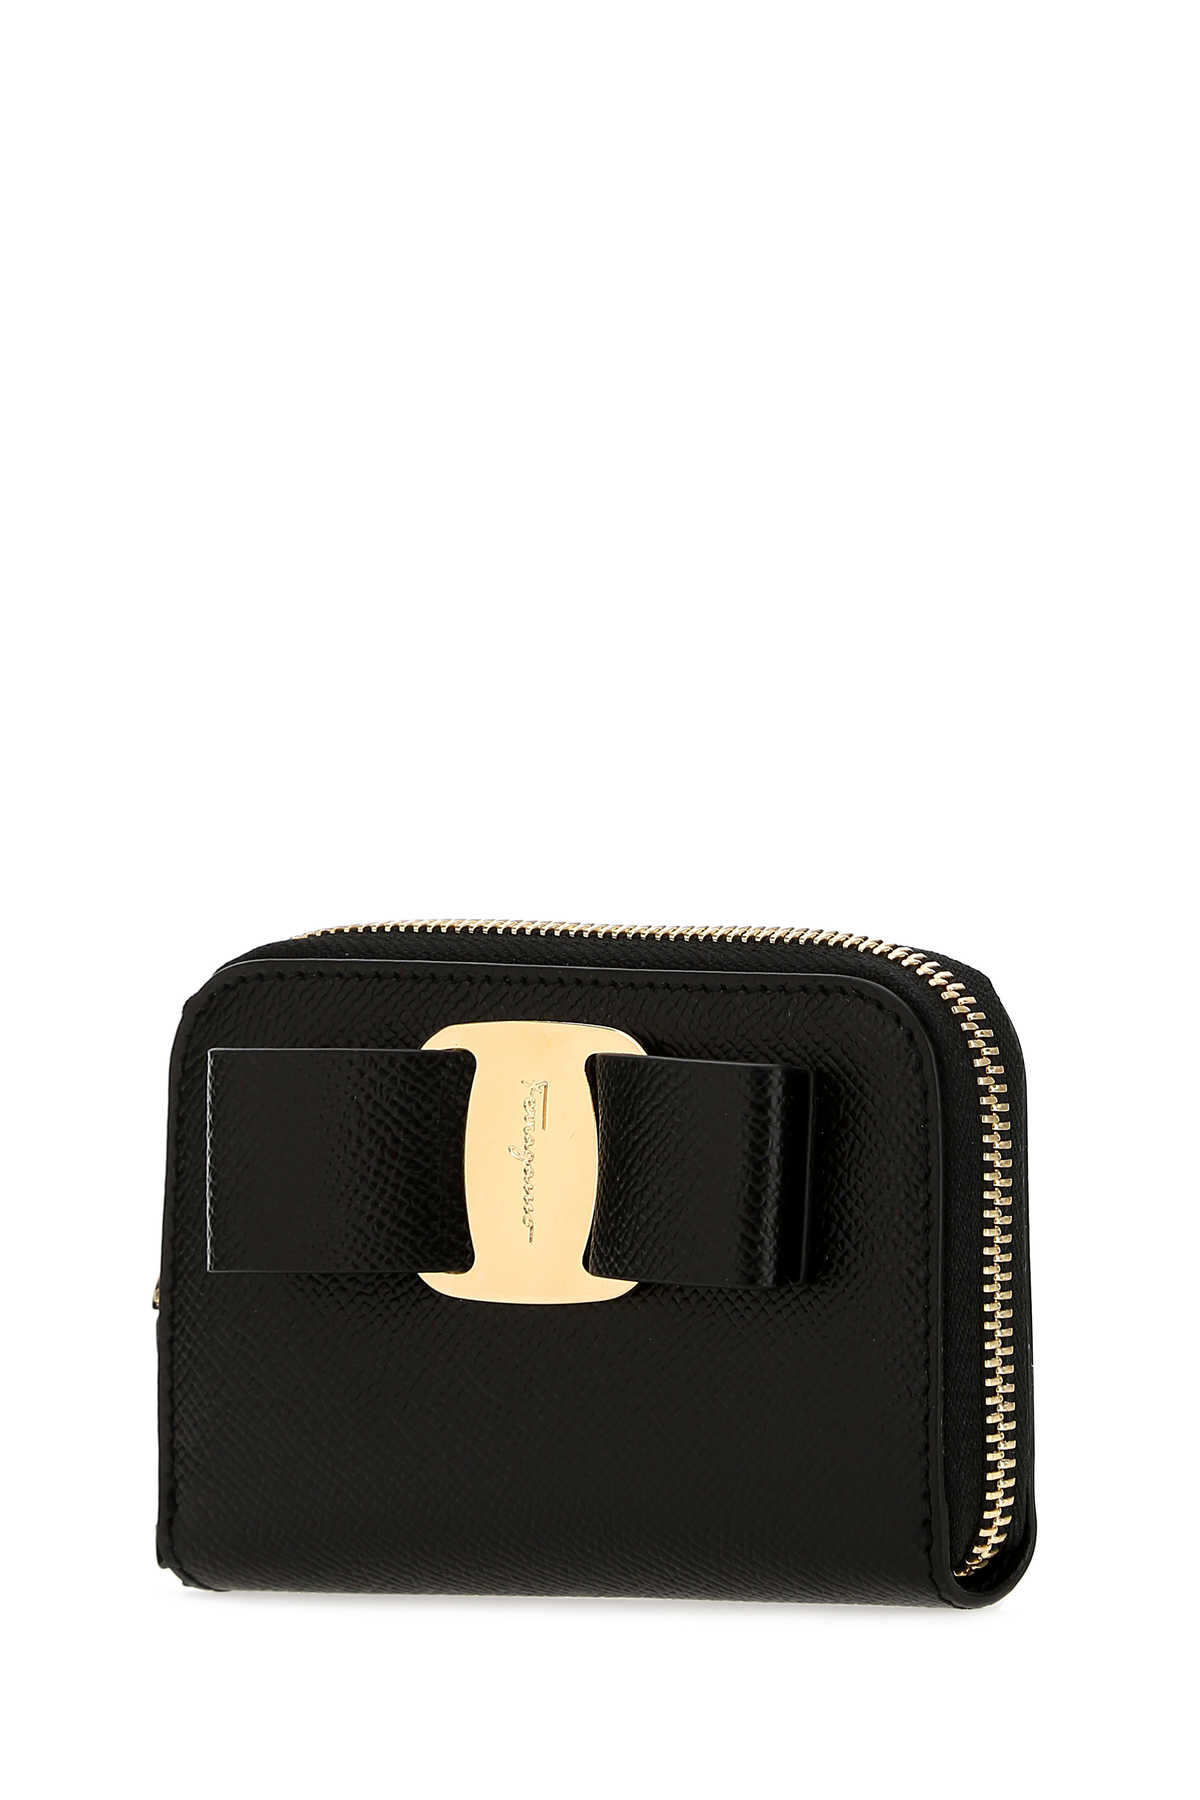 Ferragamo Black Leather Wallet In Nero